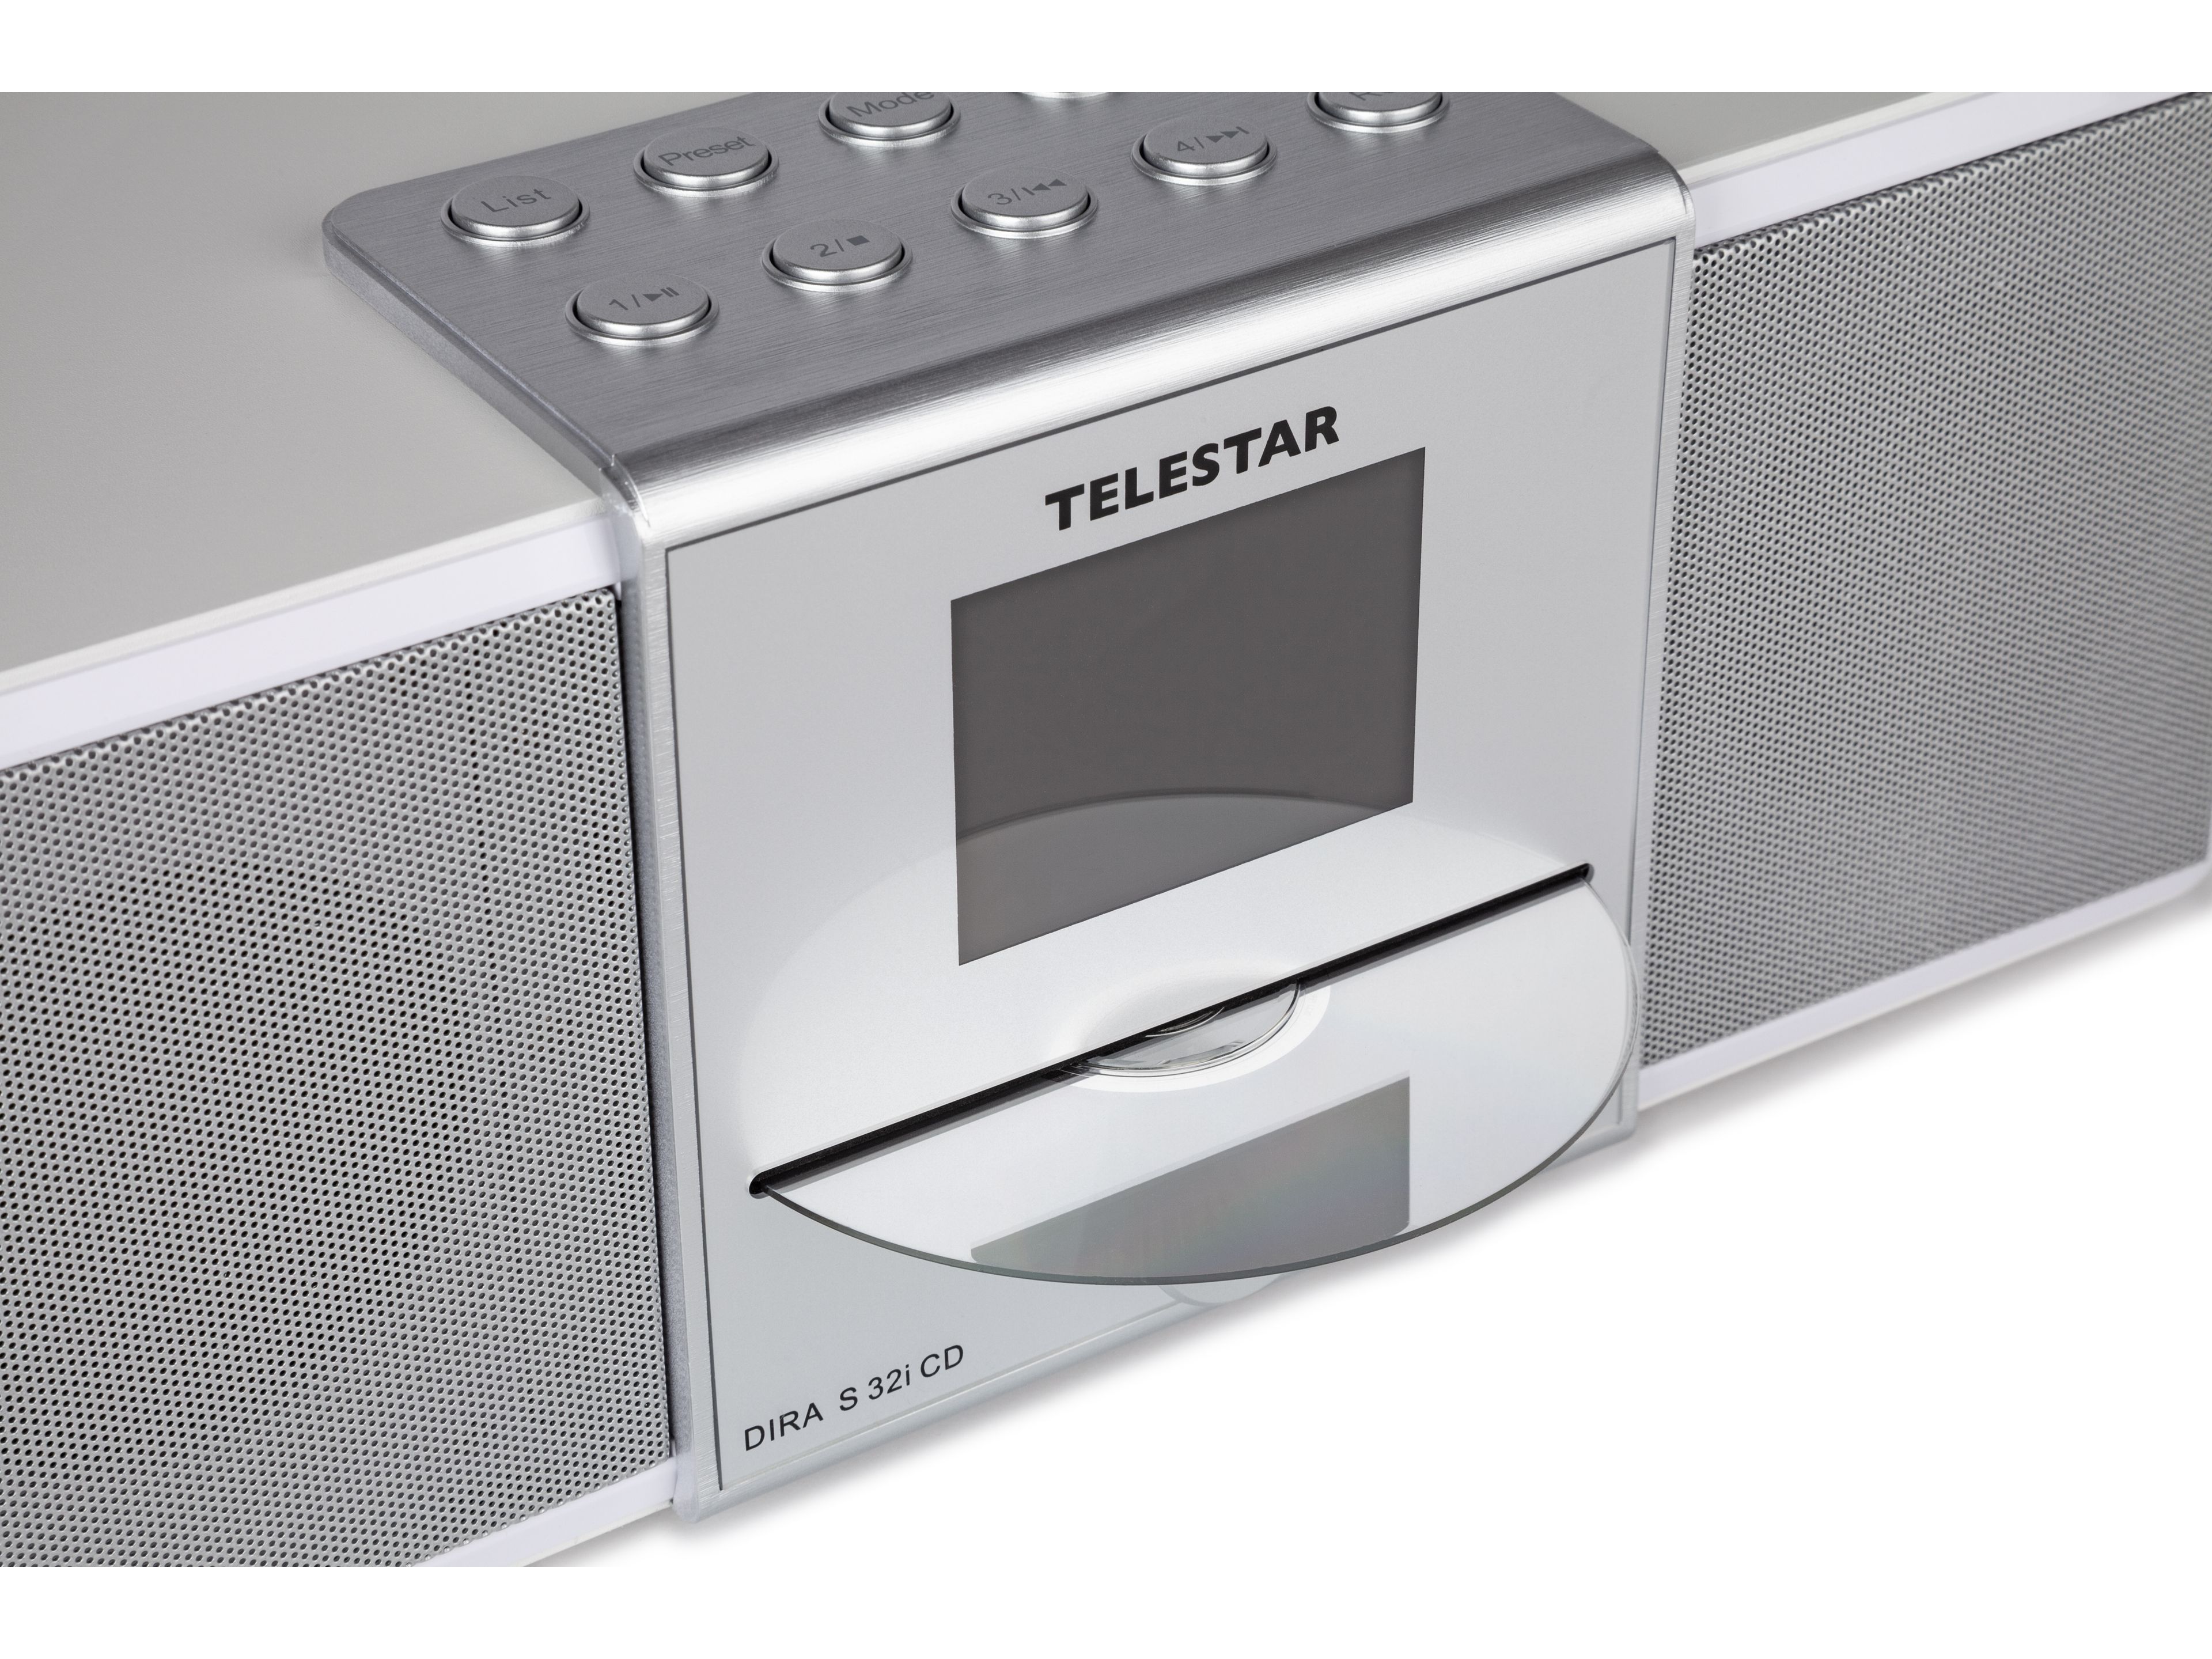 radio-stereo-telestar-dira-s32i-cd